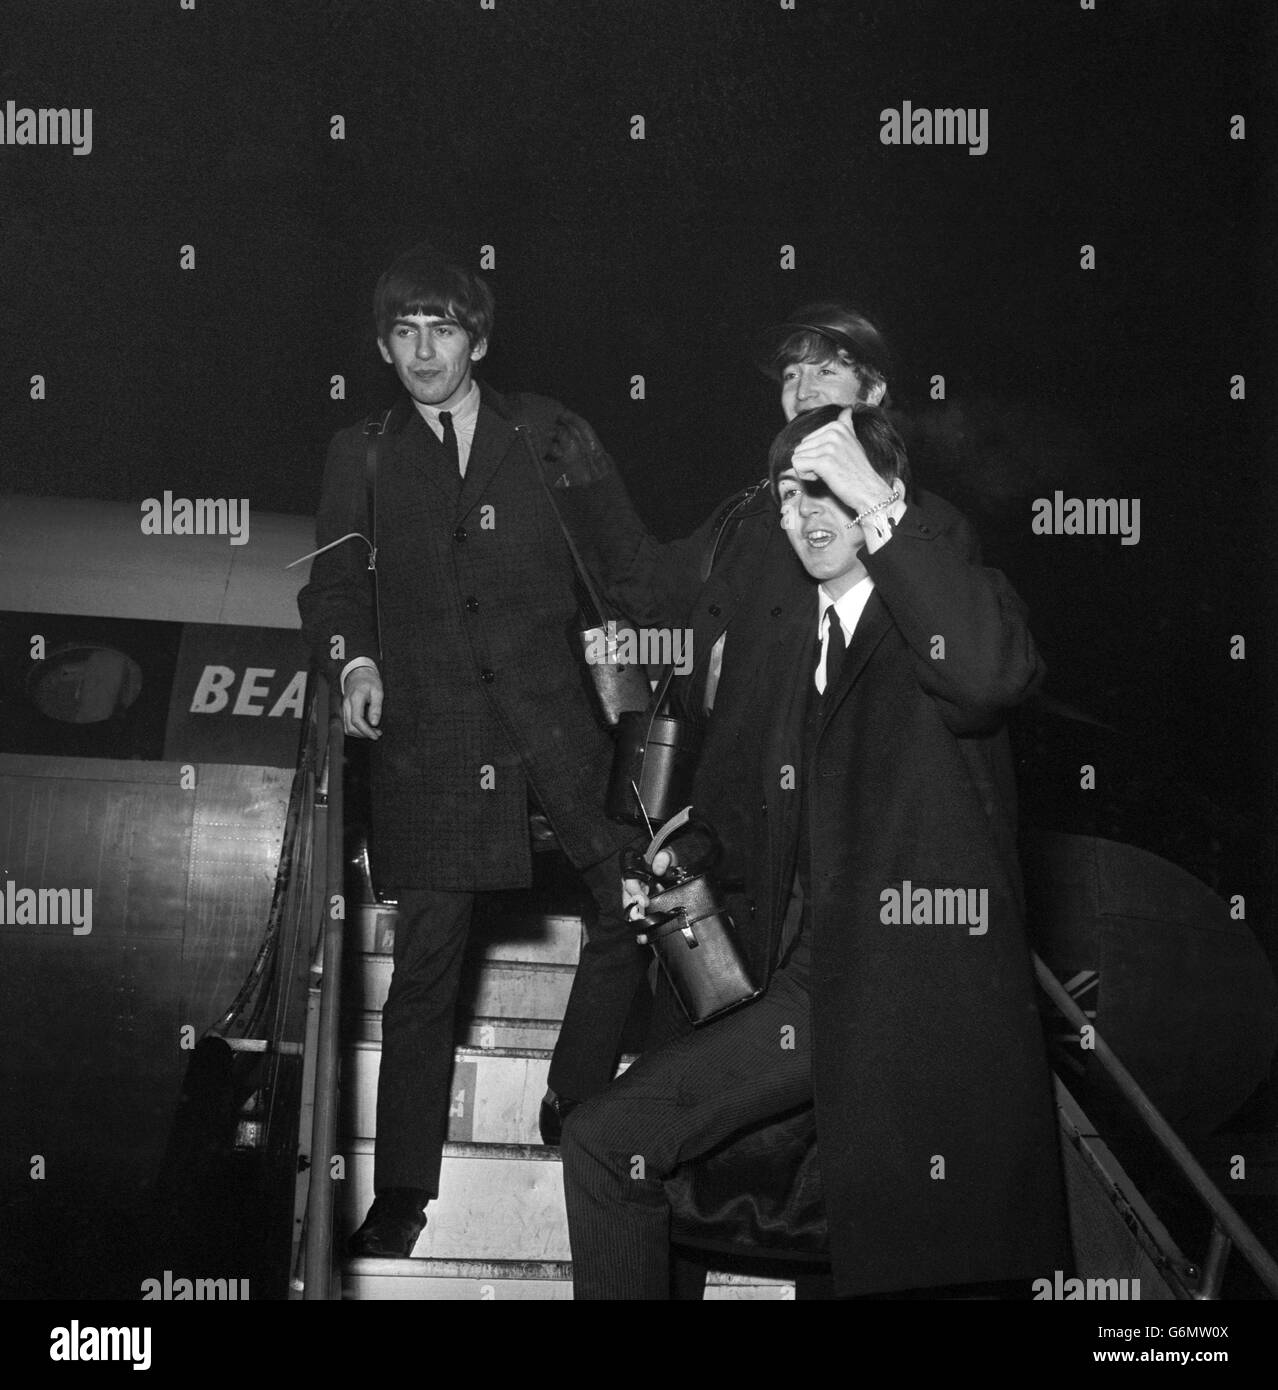 Musica - I Beatles - George Harrison John Lennon e Paul McCartney - Aeroporto di Londra Foto Stock